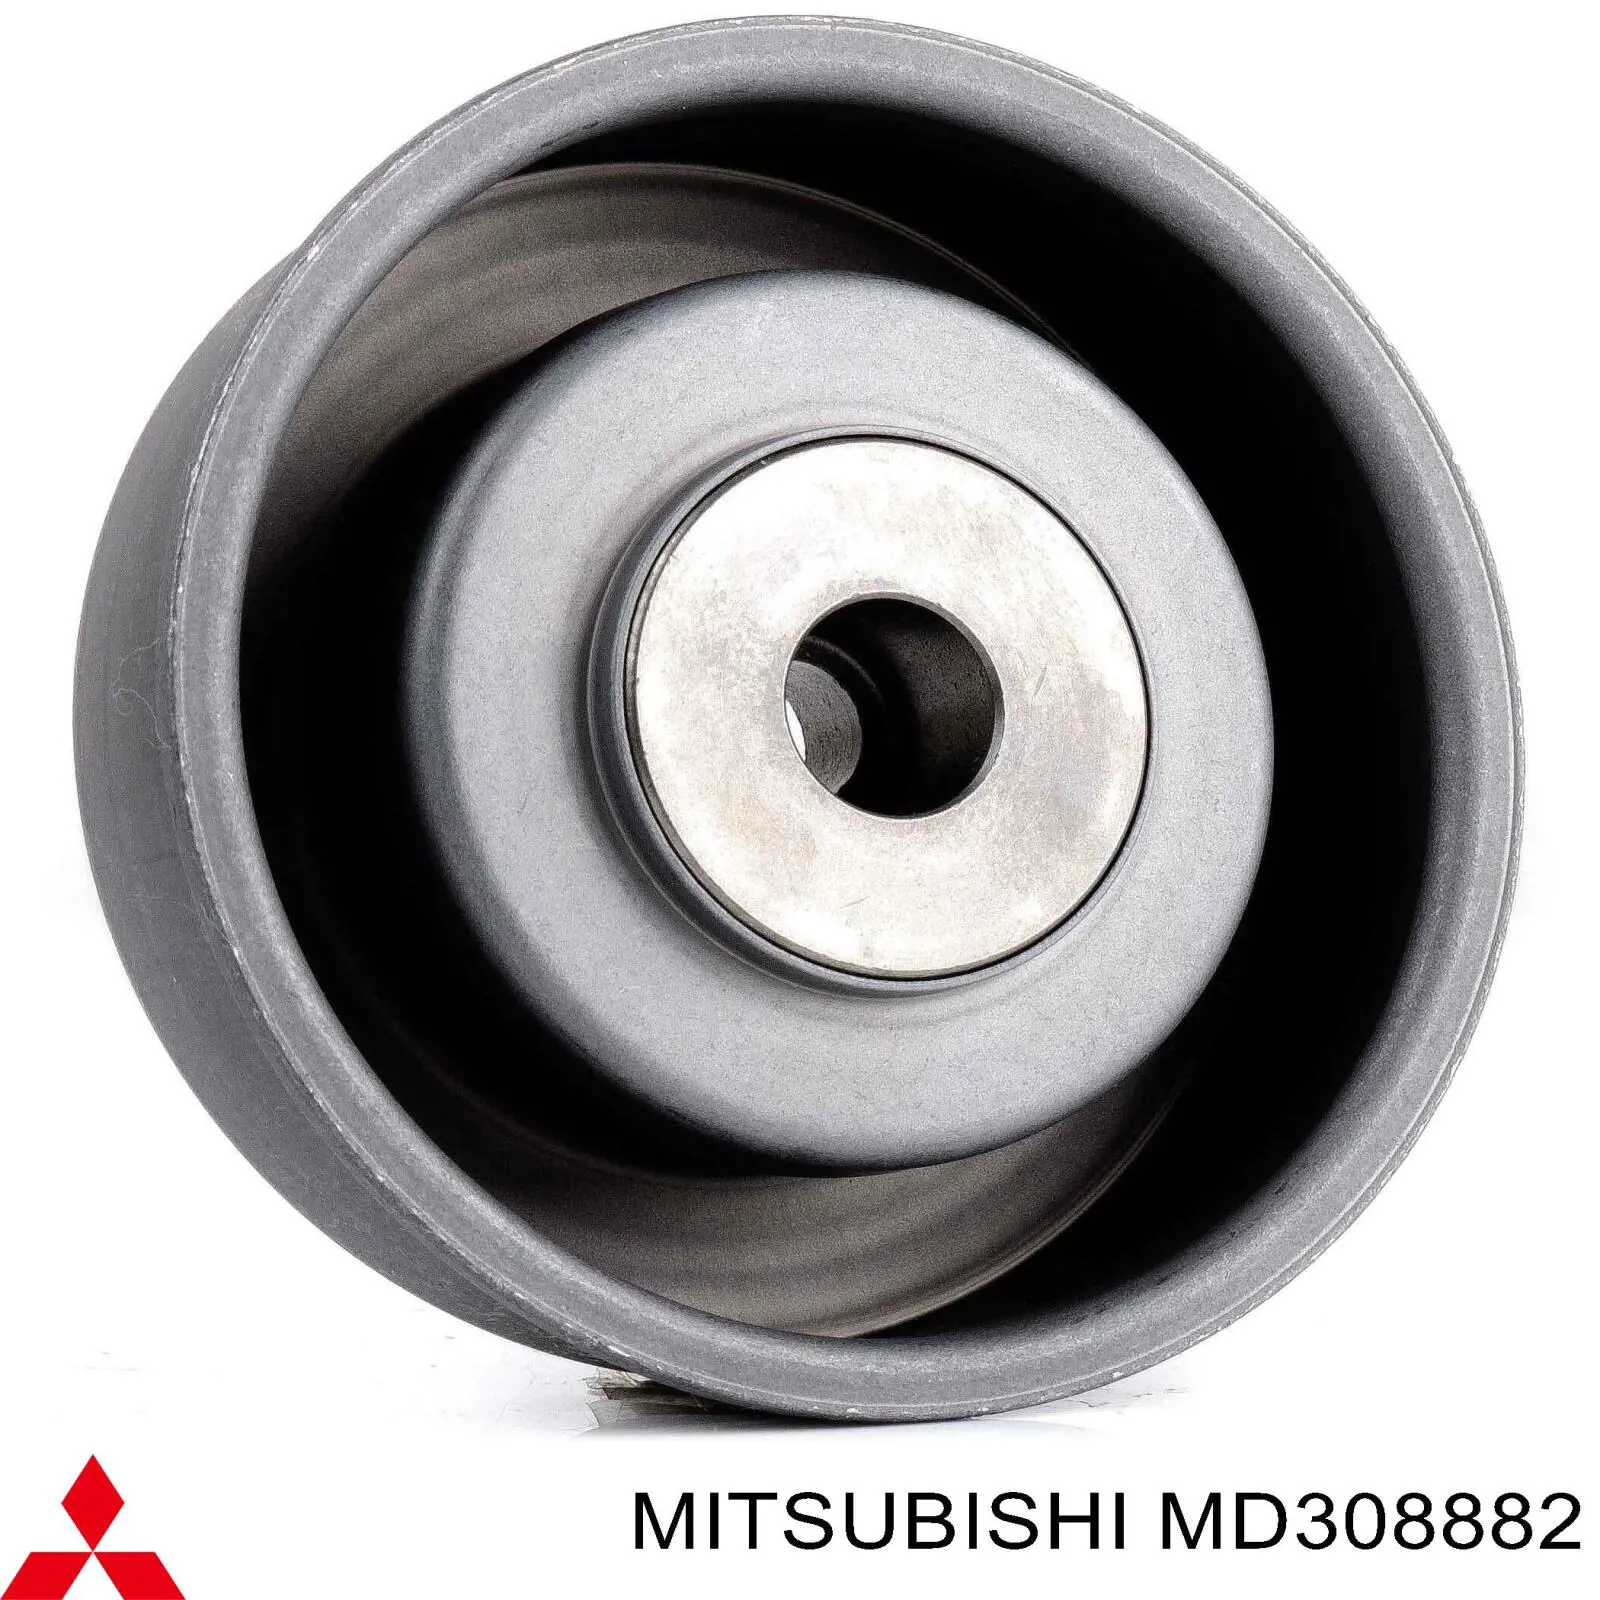 MD308882 Mitsubishi polea tensora correa poli v